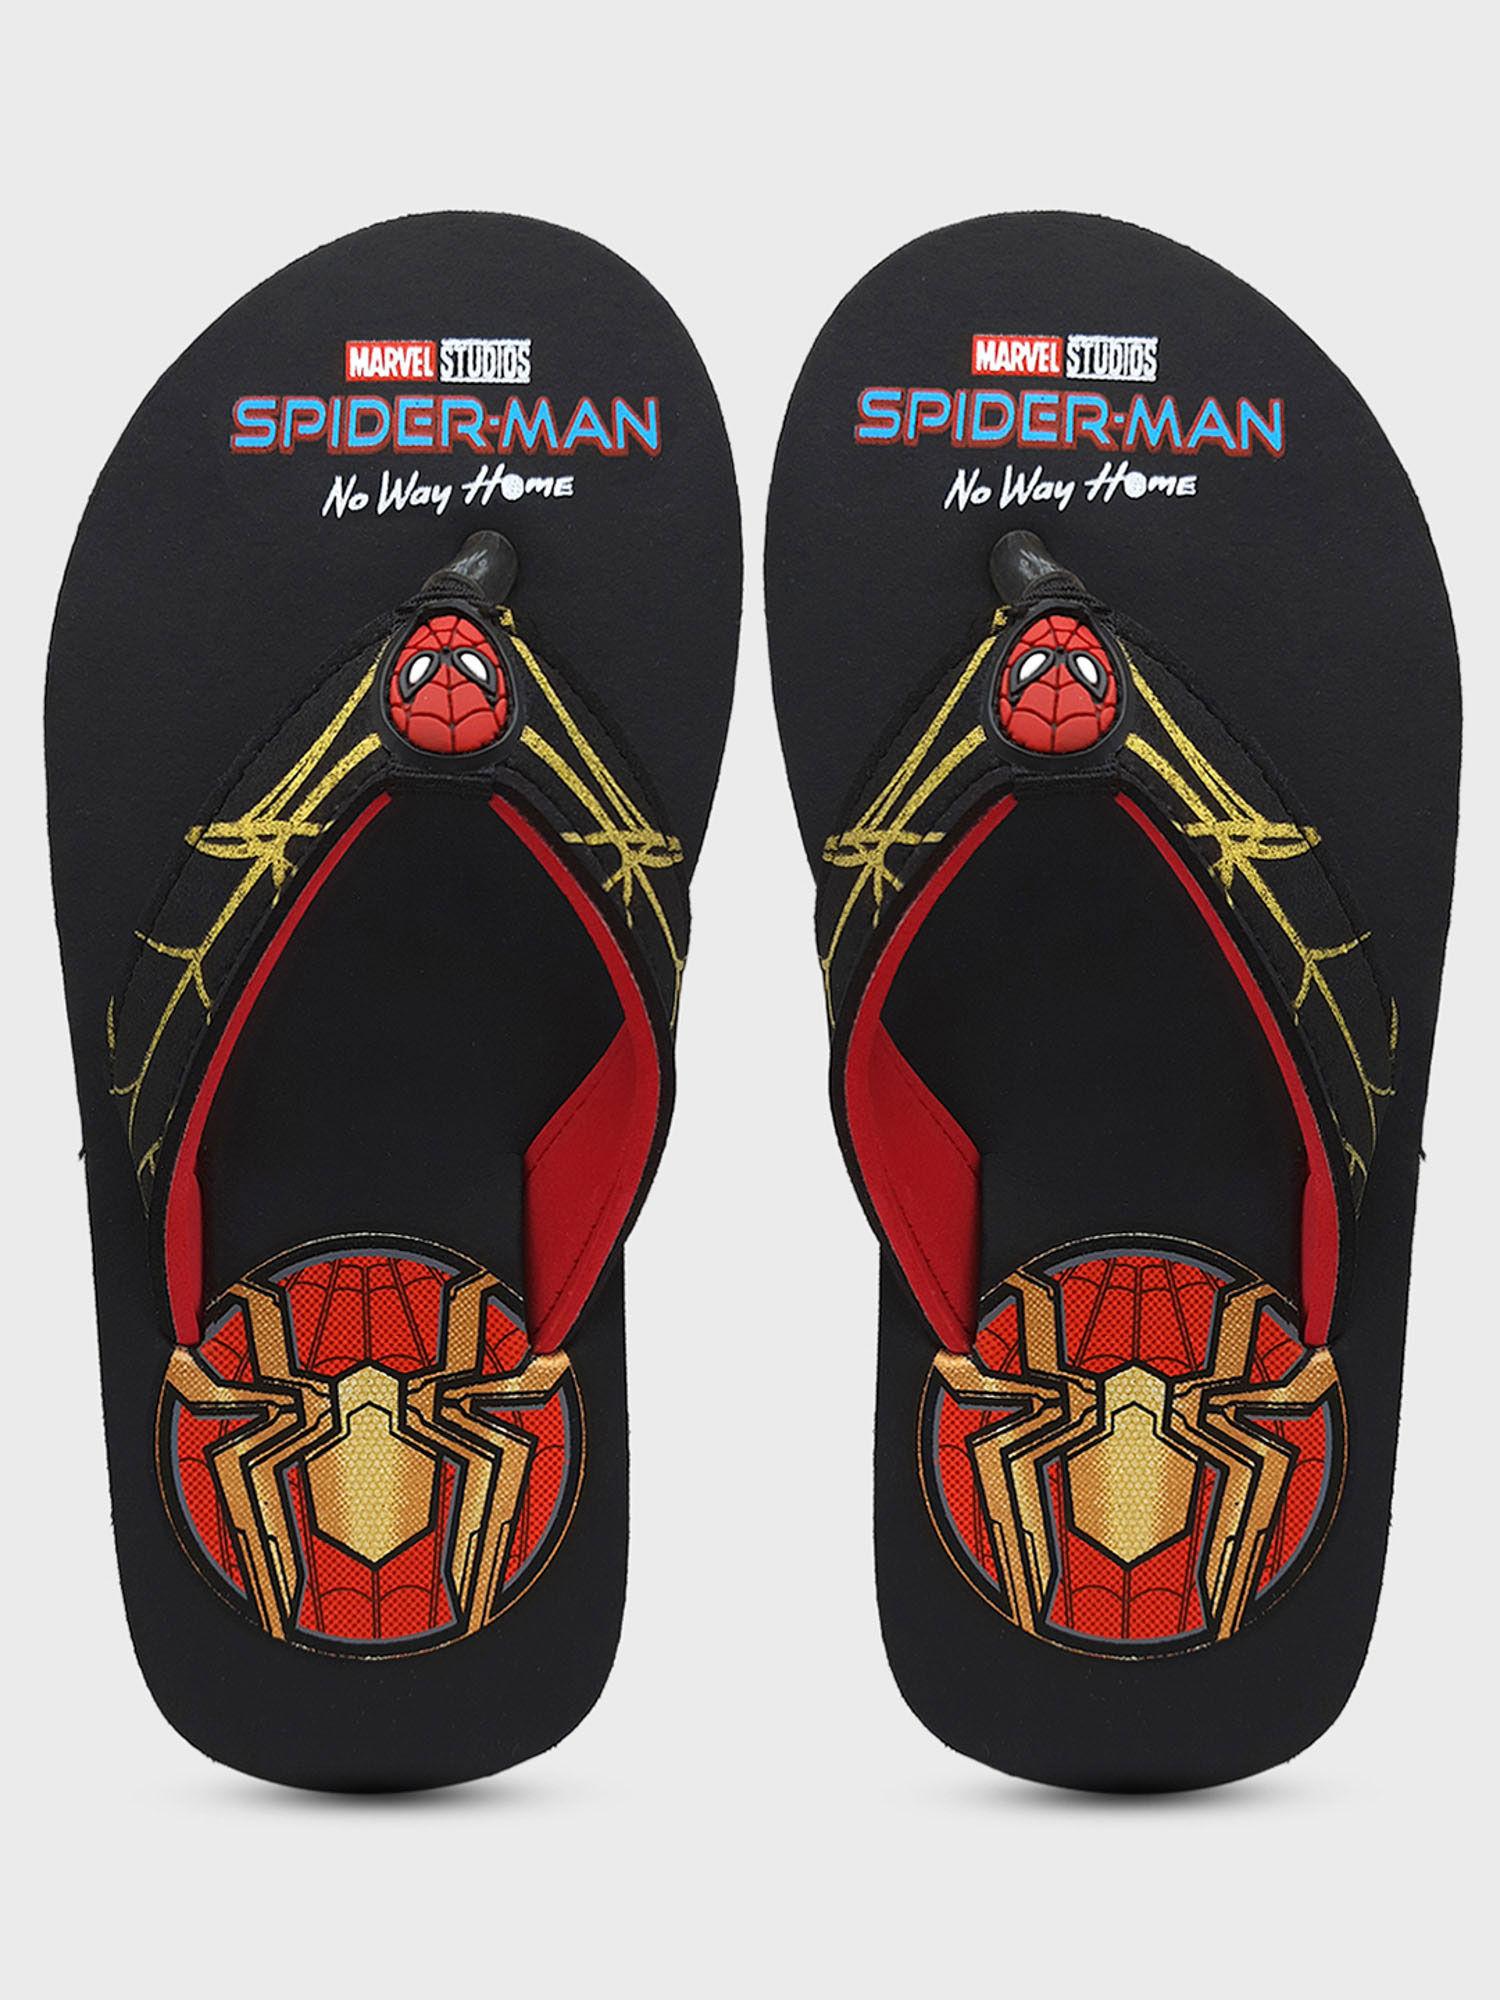 spider-man no way home featured black flip-flops for boys